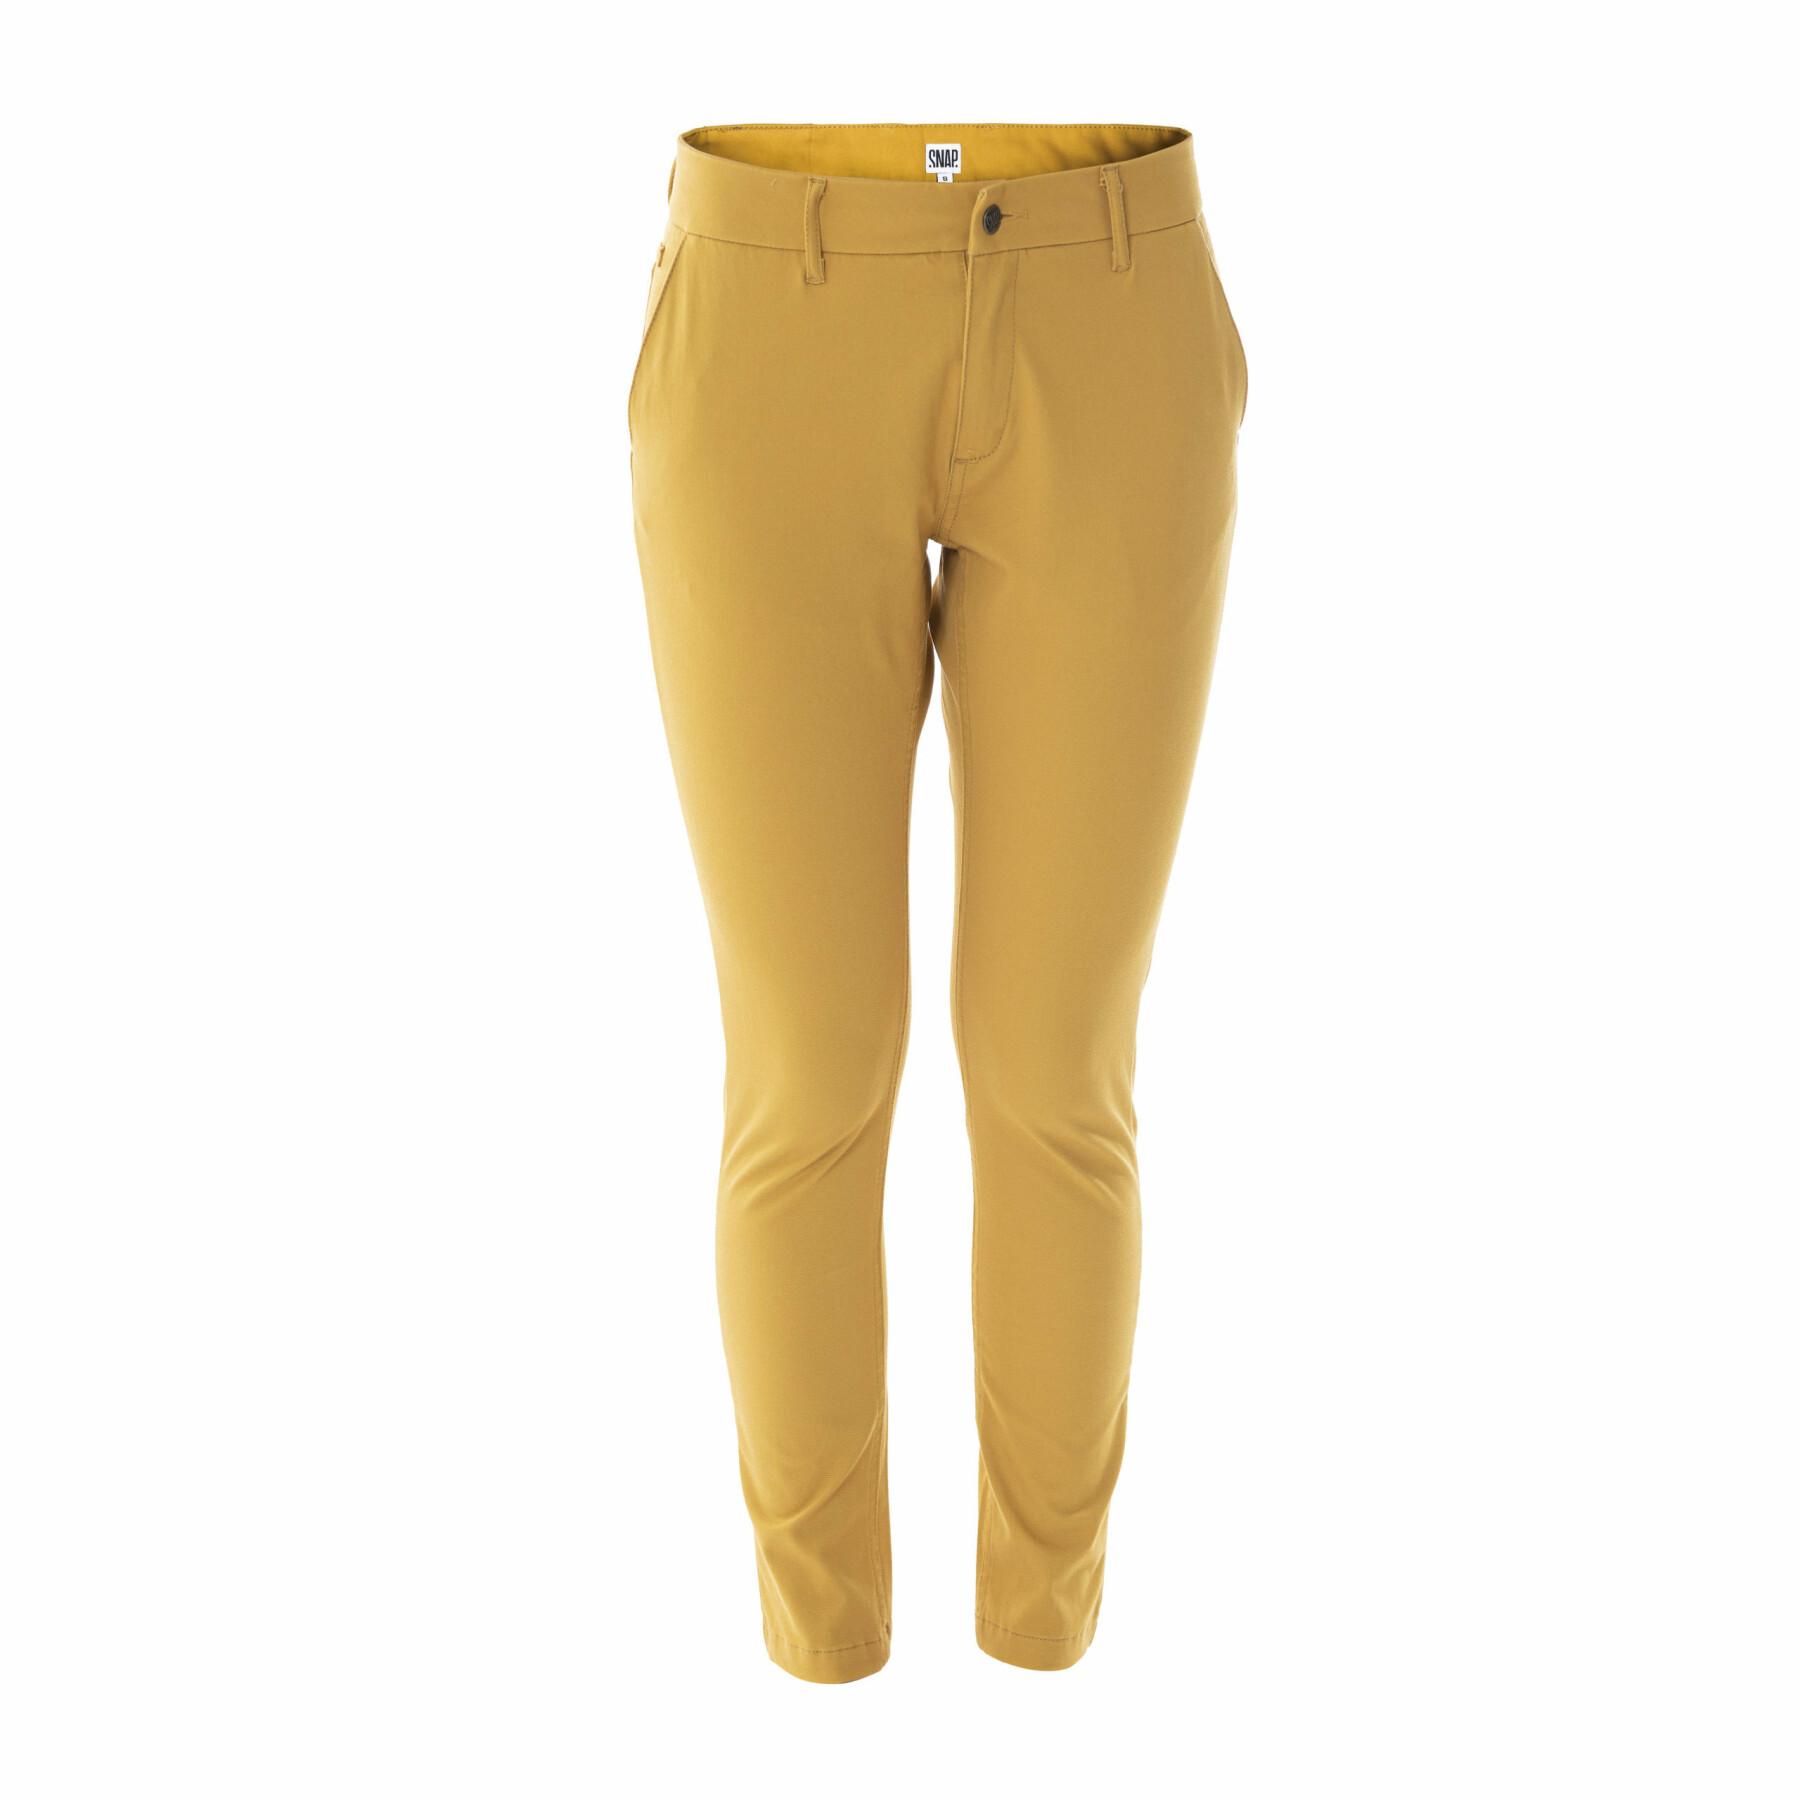 Women's yellow Pants